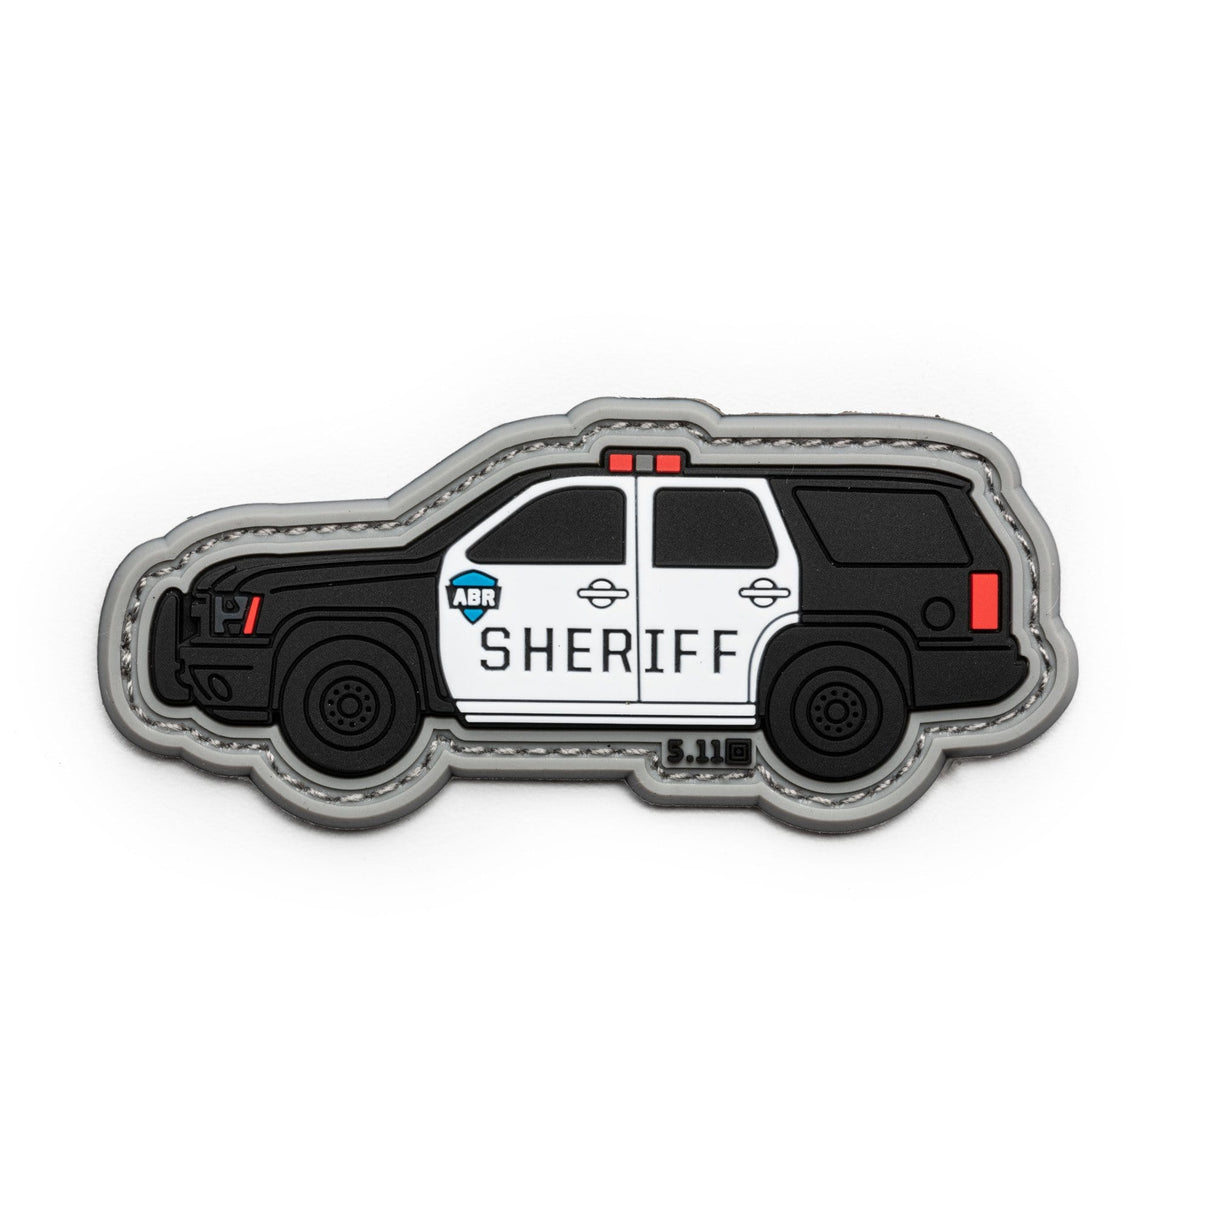 SHERIFF SUV PATCH